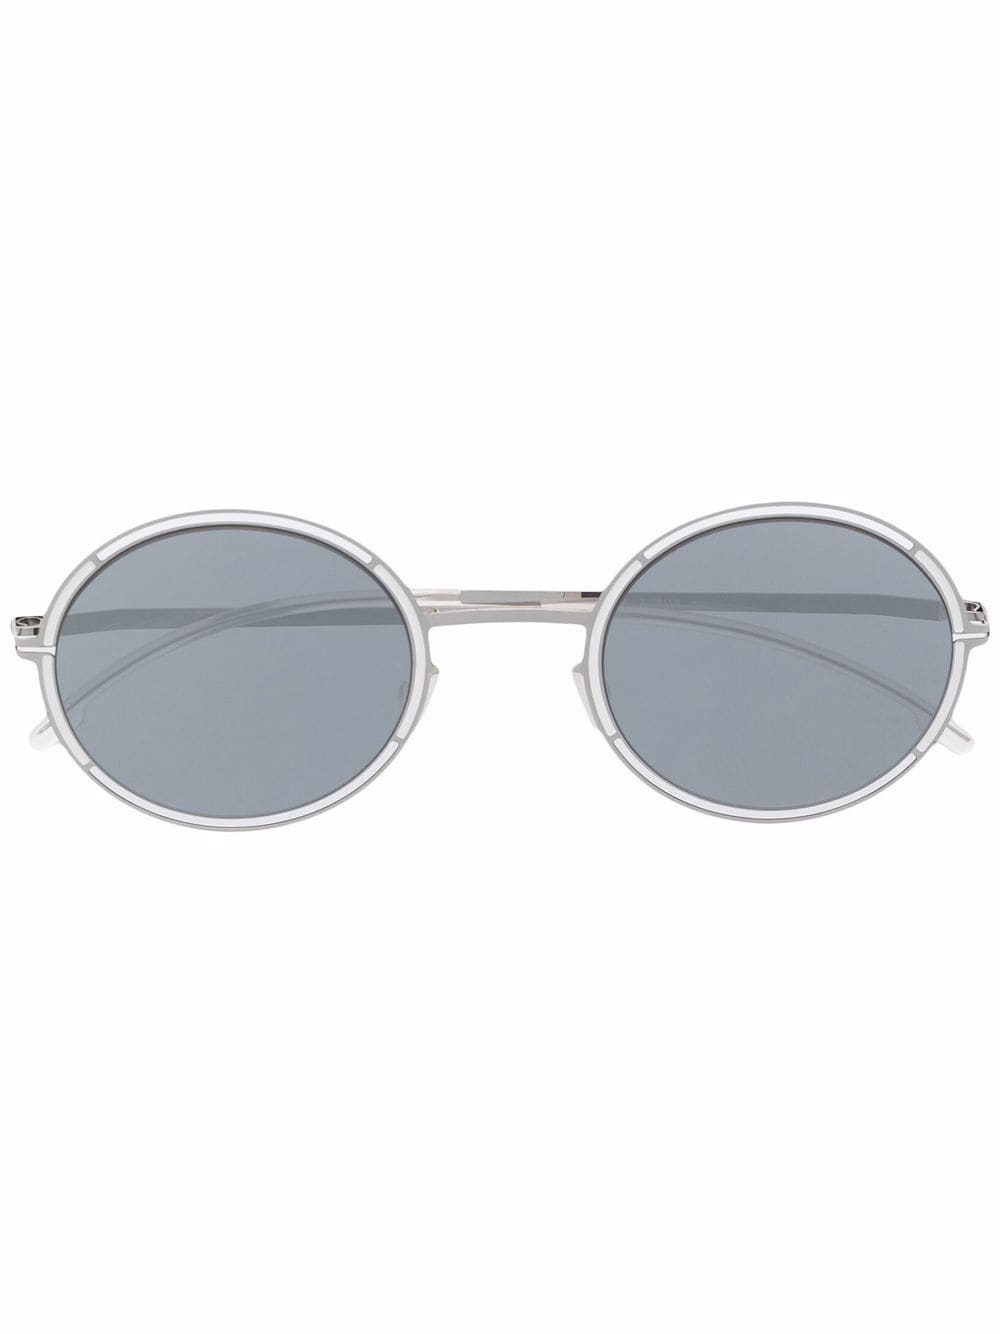 Mykita round frame sunglasses - Silver von Mykita